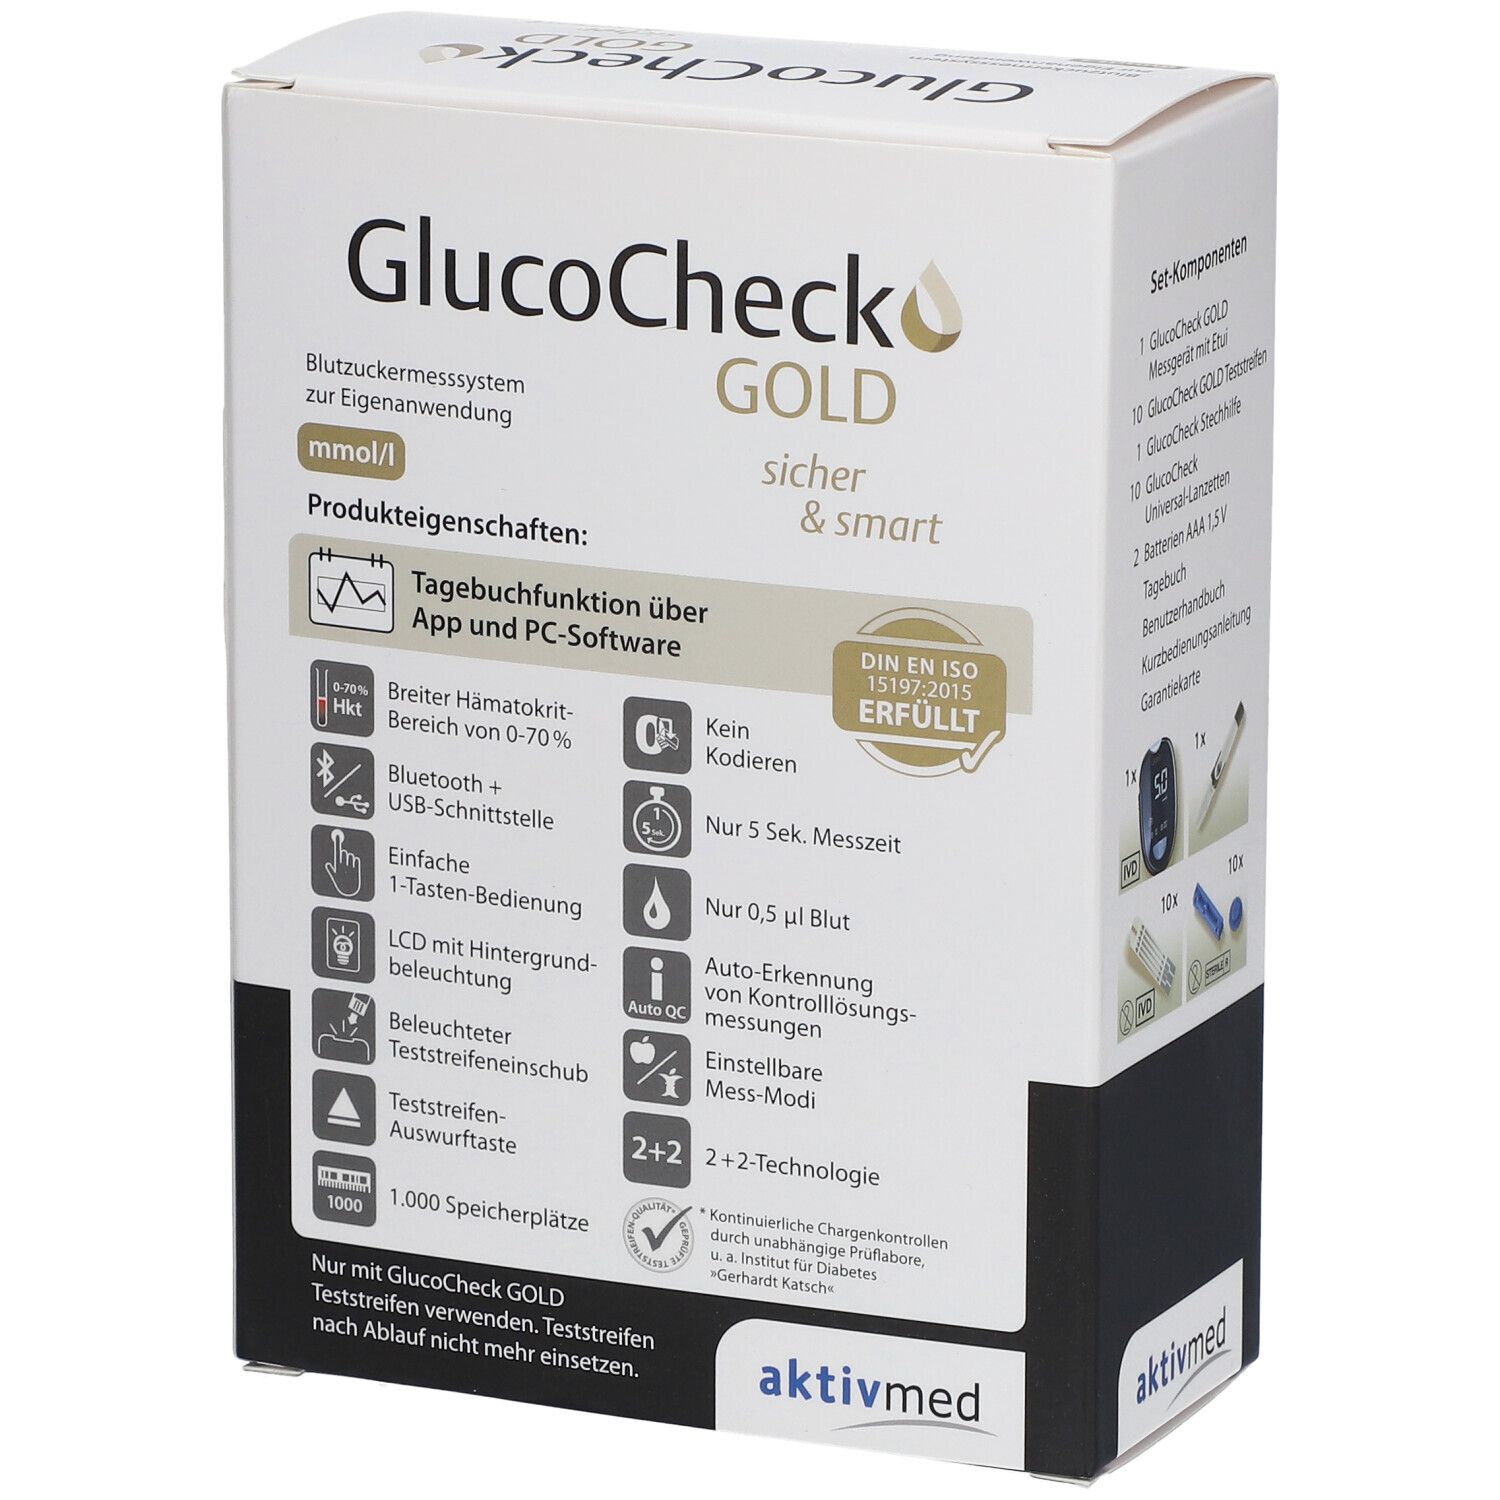 GlucoCheck GOLD mmol/l